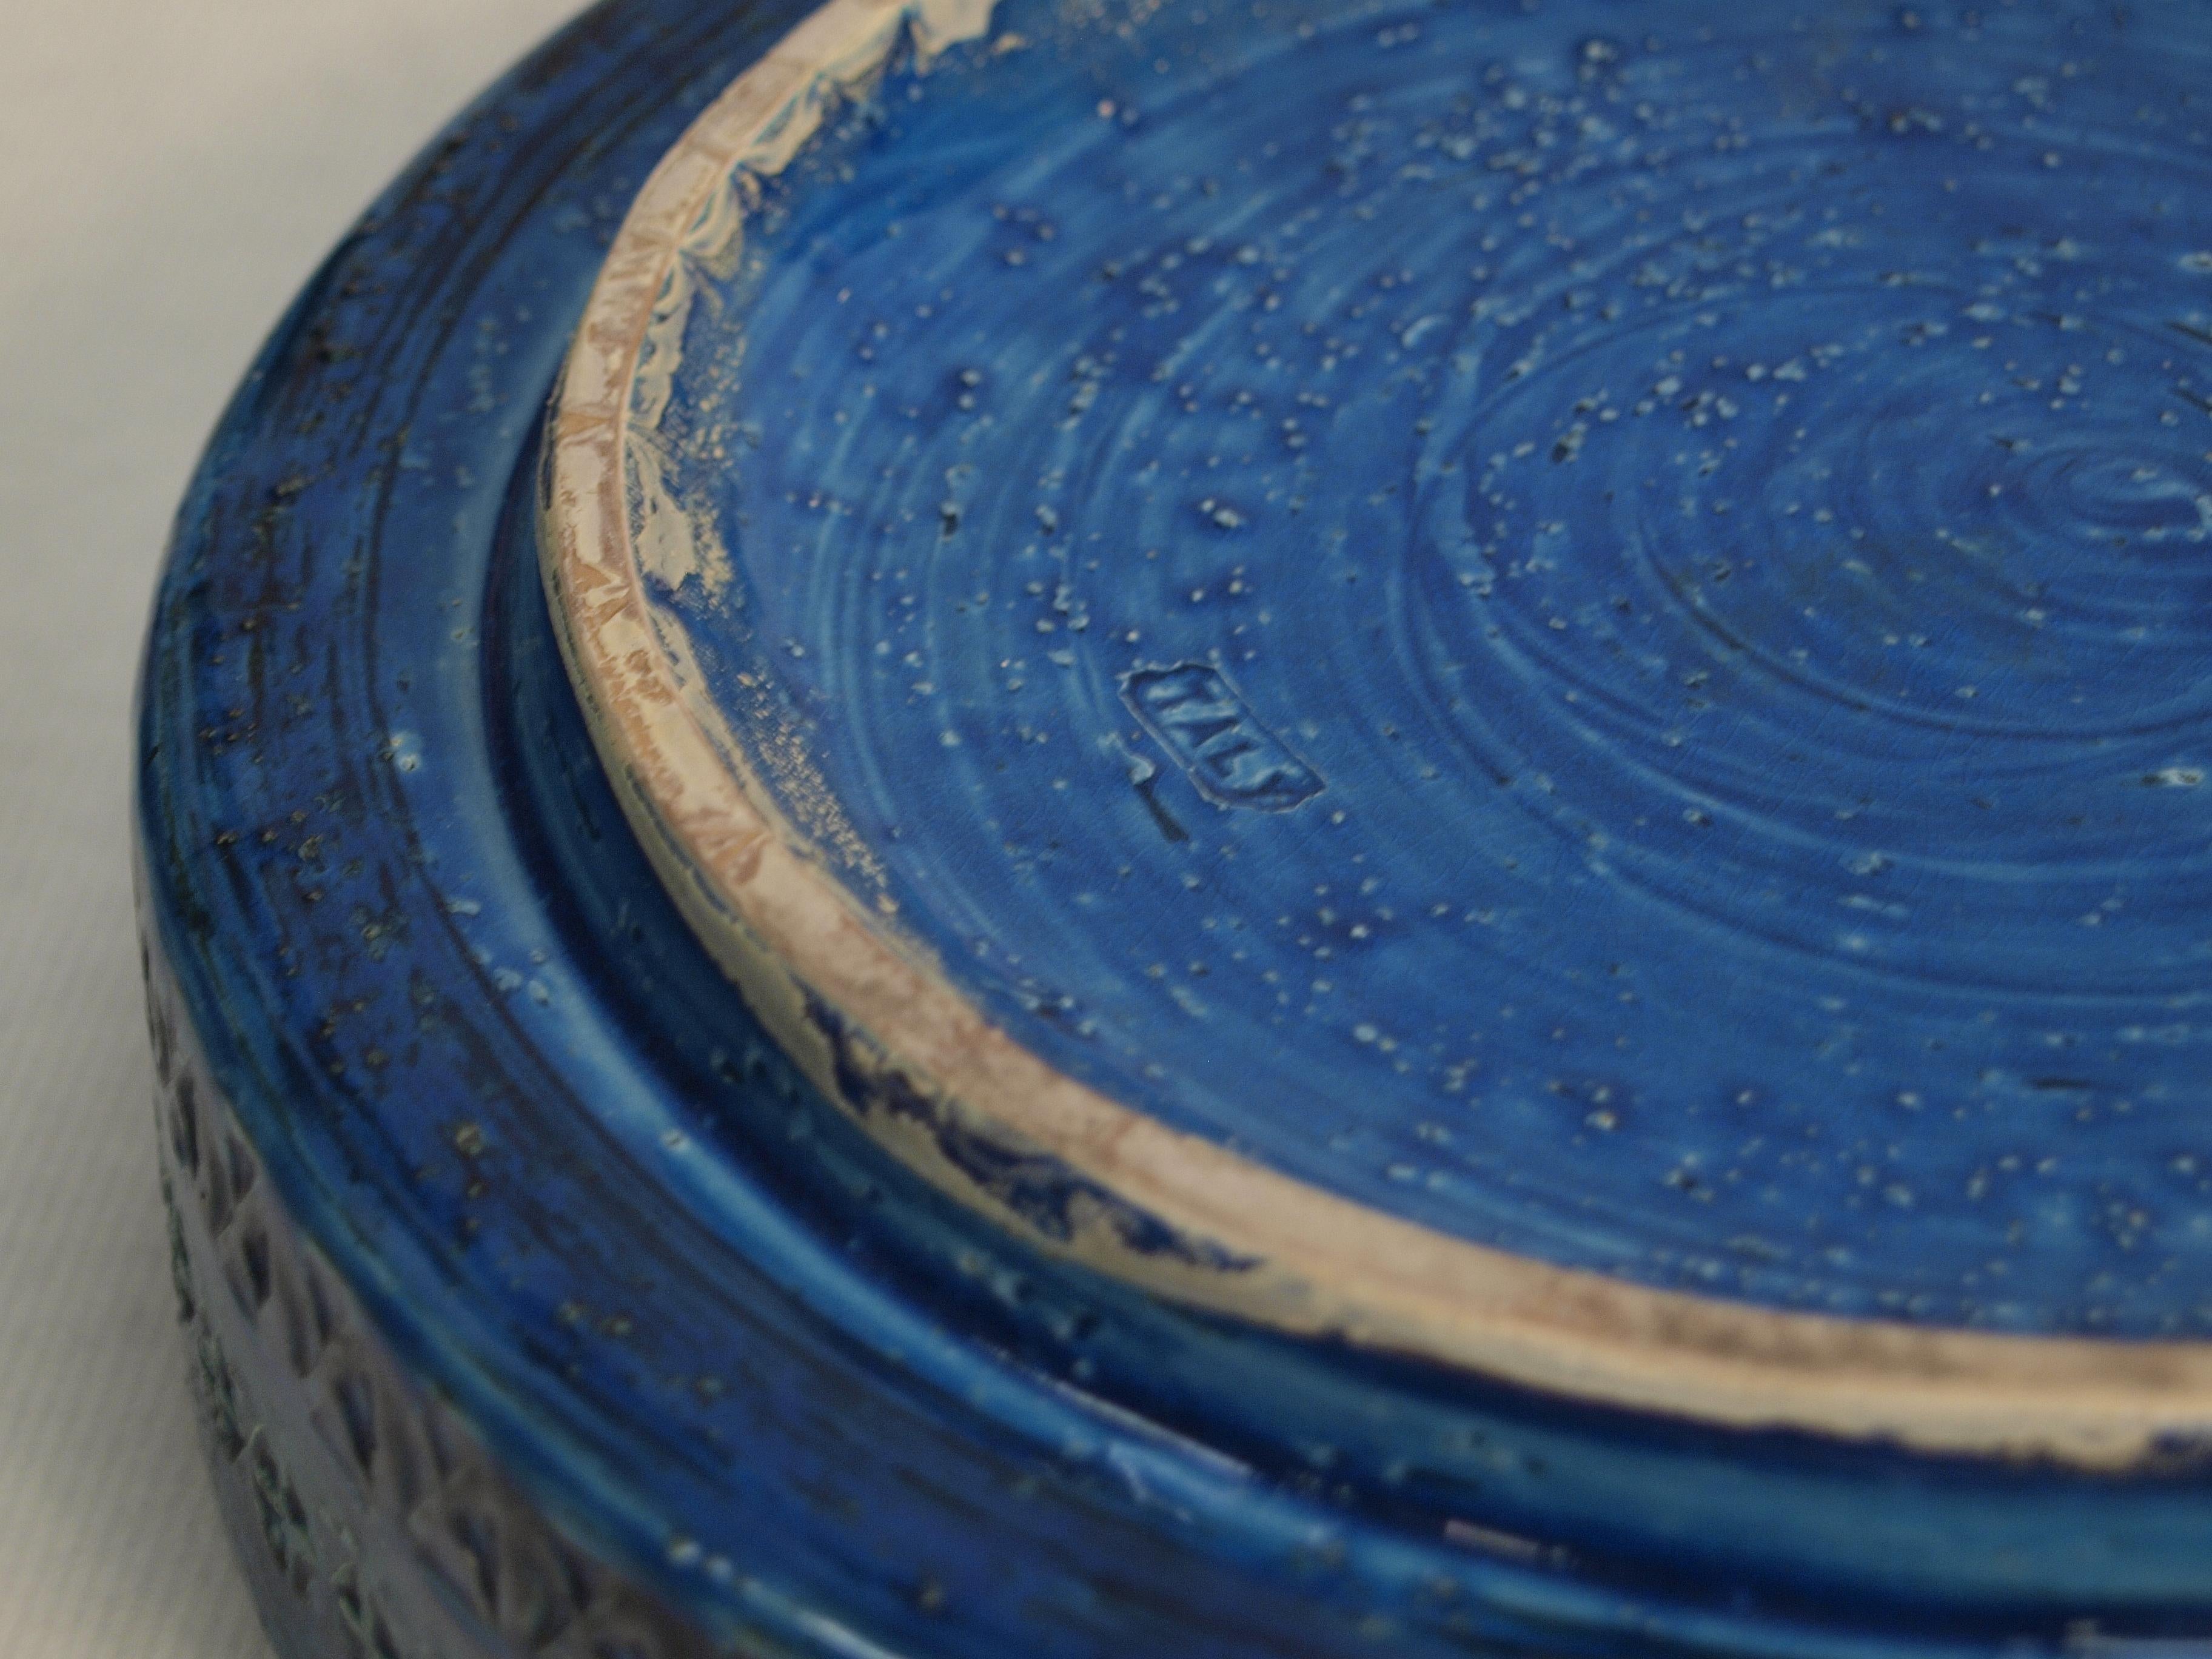 Aldo Londi Circular Ceramic Bowl, Blue Glazed, Bitossi, Mid-20th Century For Sale 1